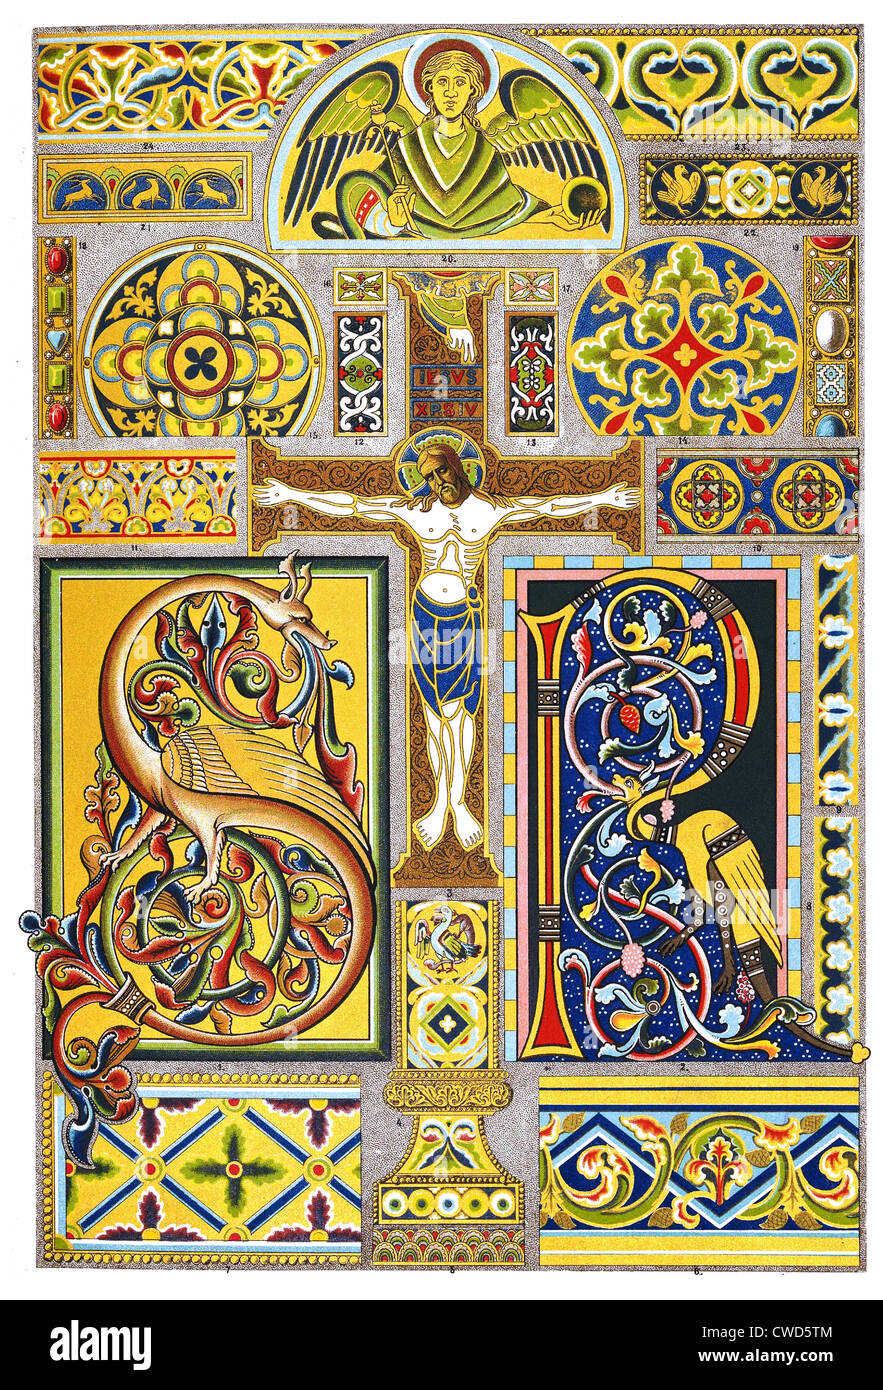 Romanesque Middle Ages manuscript illumination and enamel Stock Photo